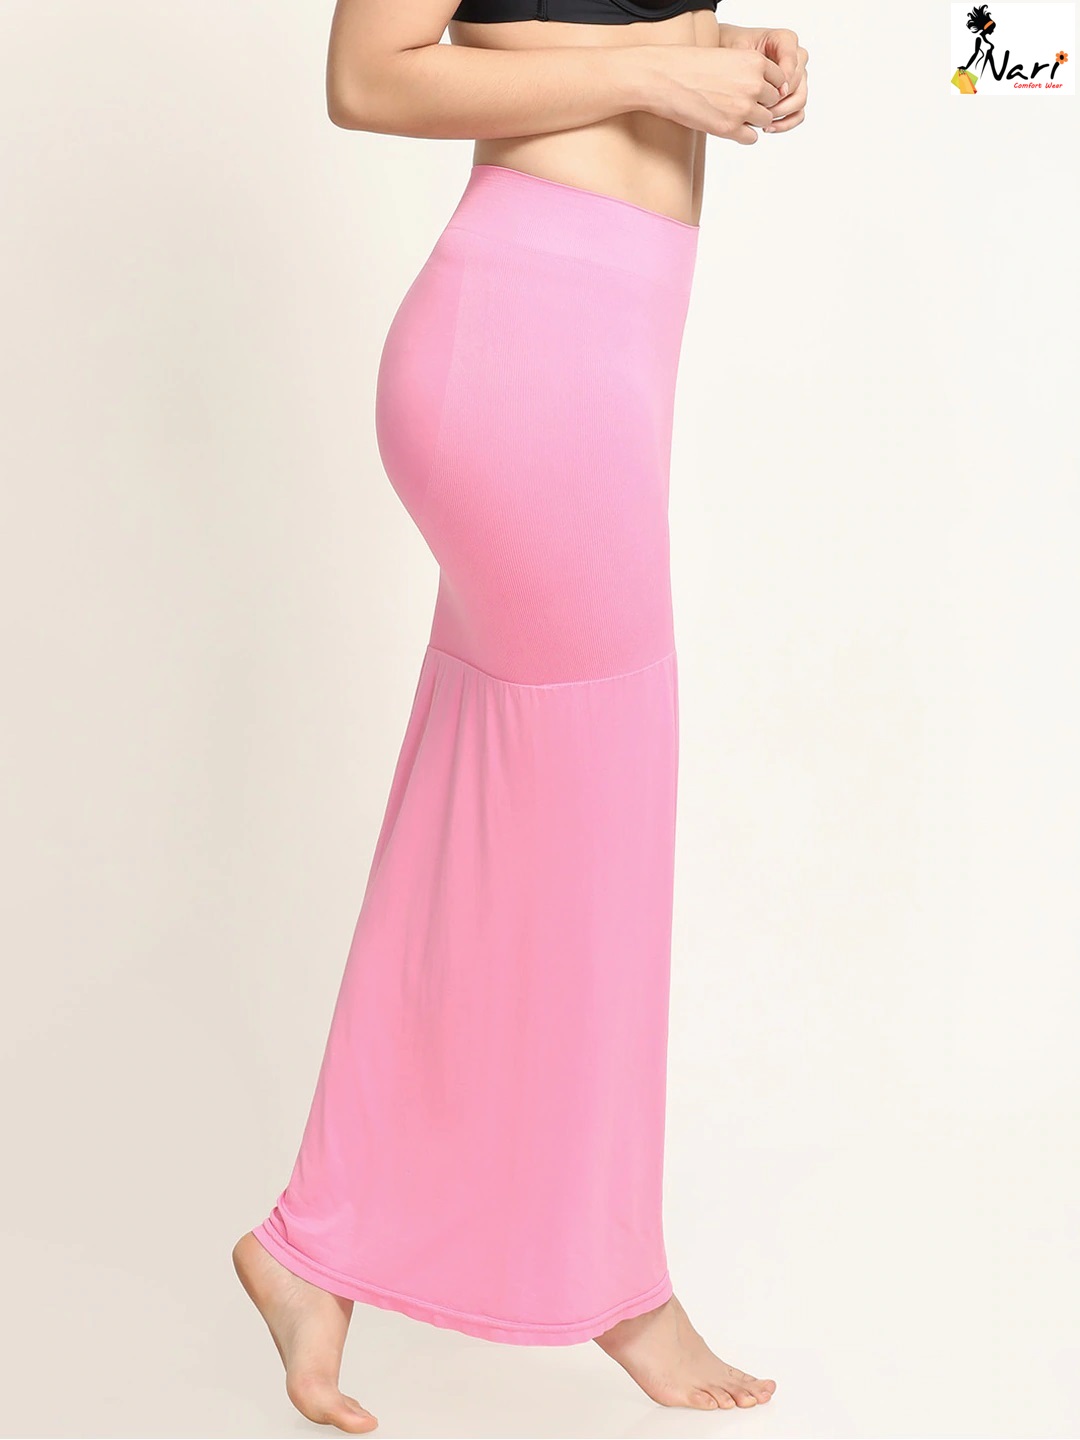 Saree Shapewear Petticoat for Women 4005 Saree Shaper Candy Pink - Nari